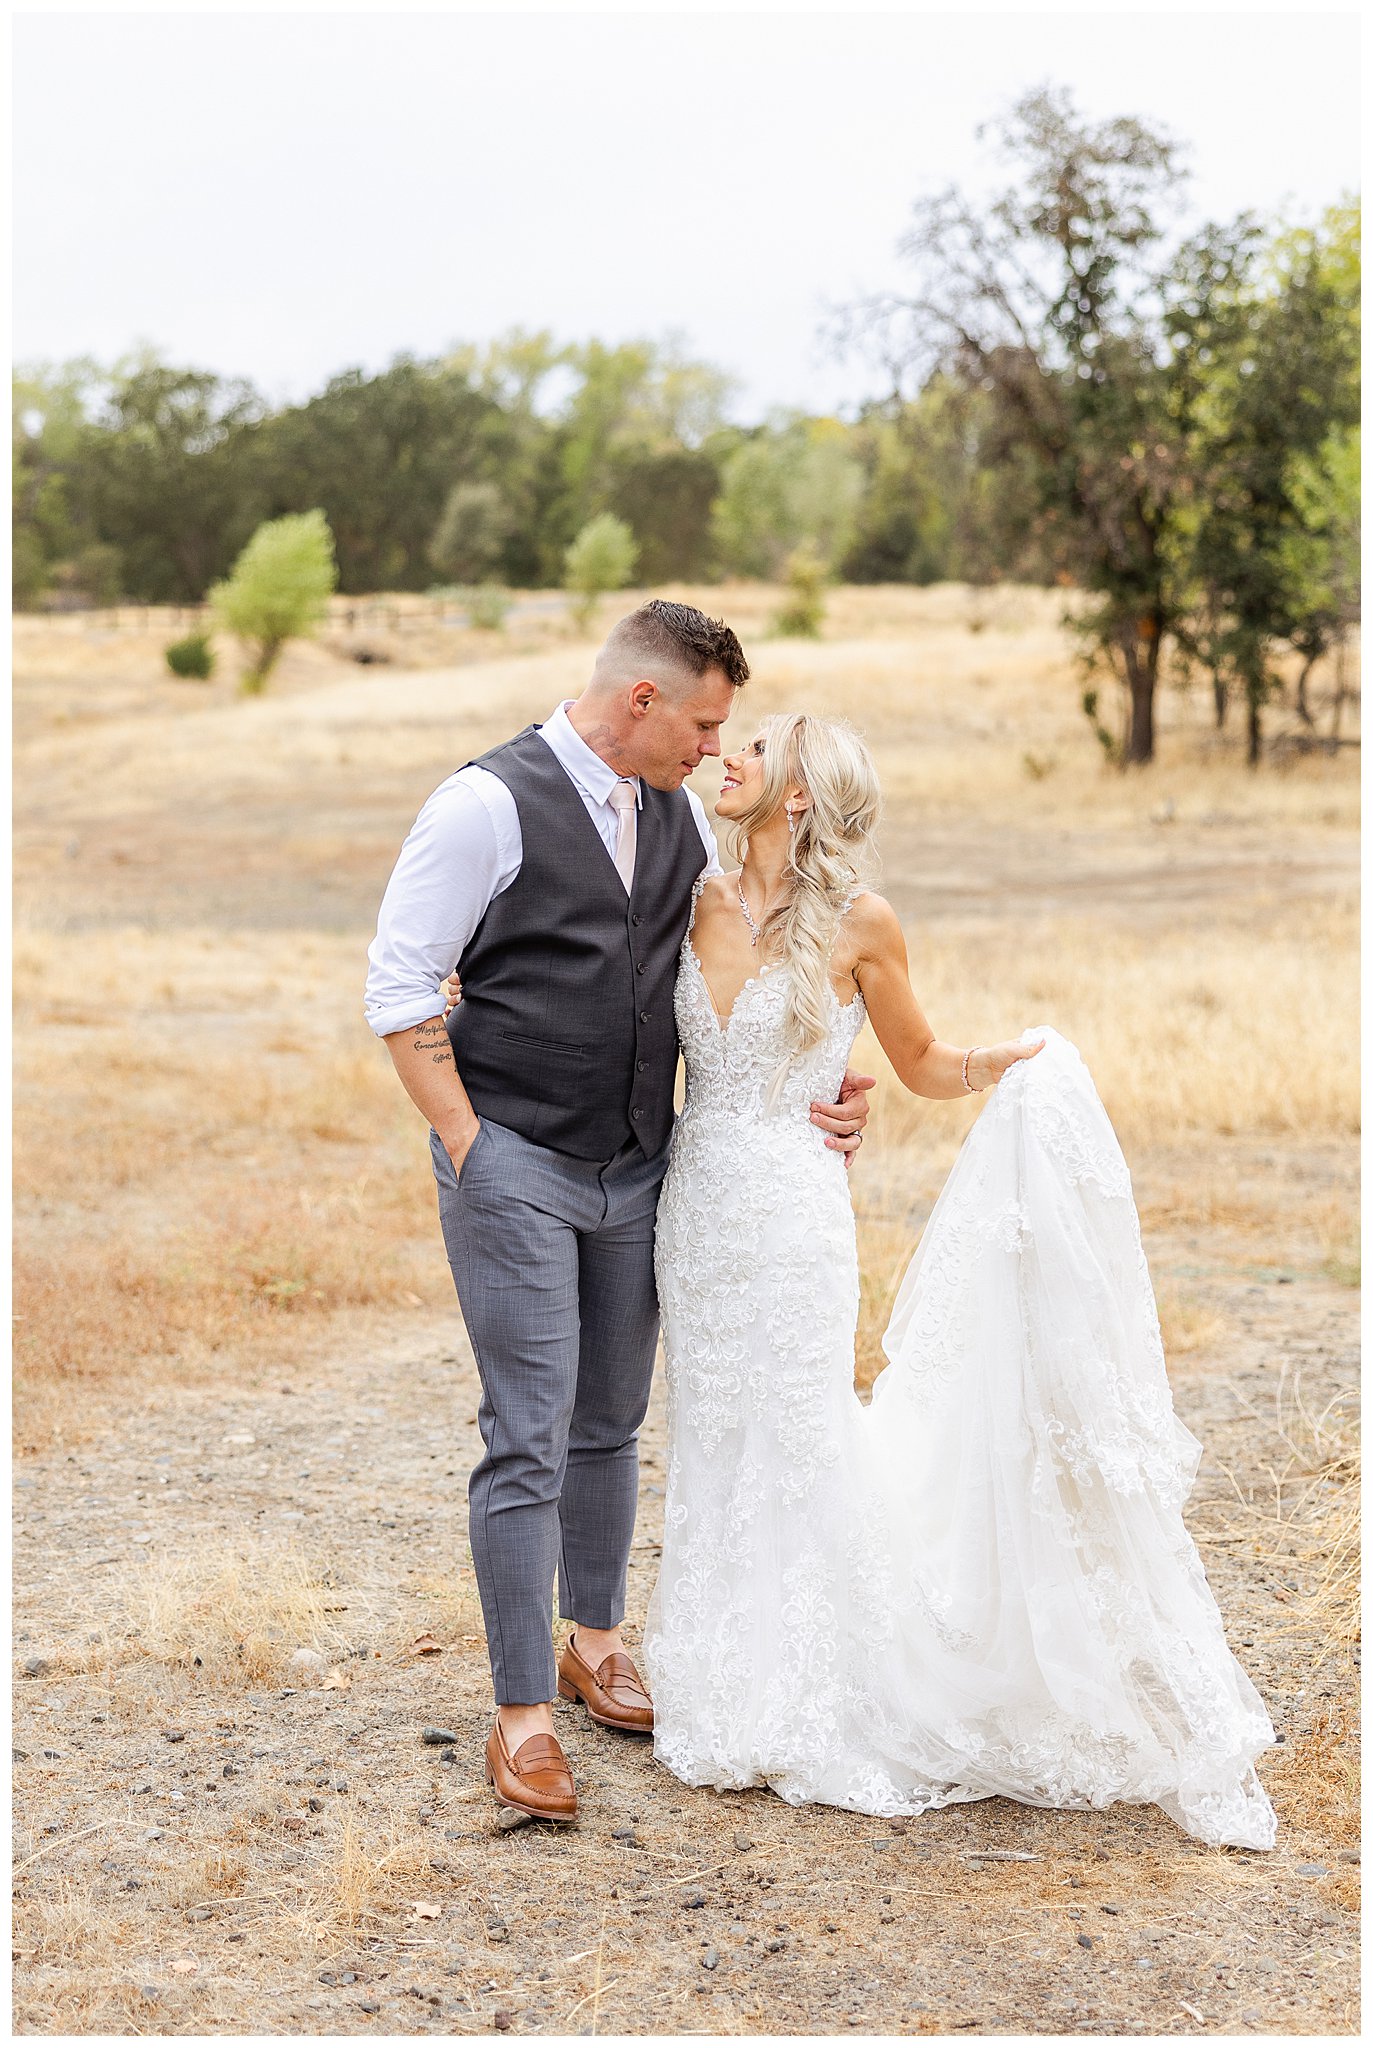 Walking on Wedding Day in Grass Field | Svetlana + Brett